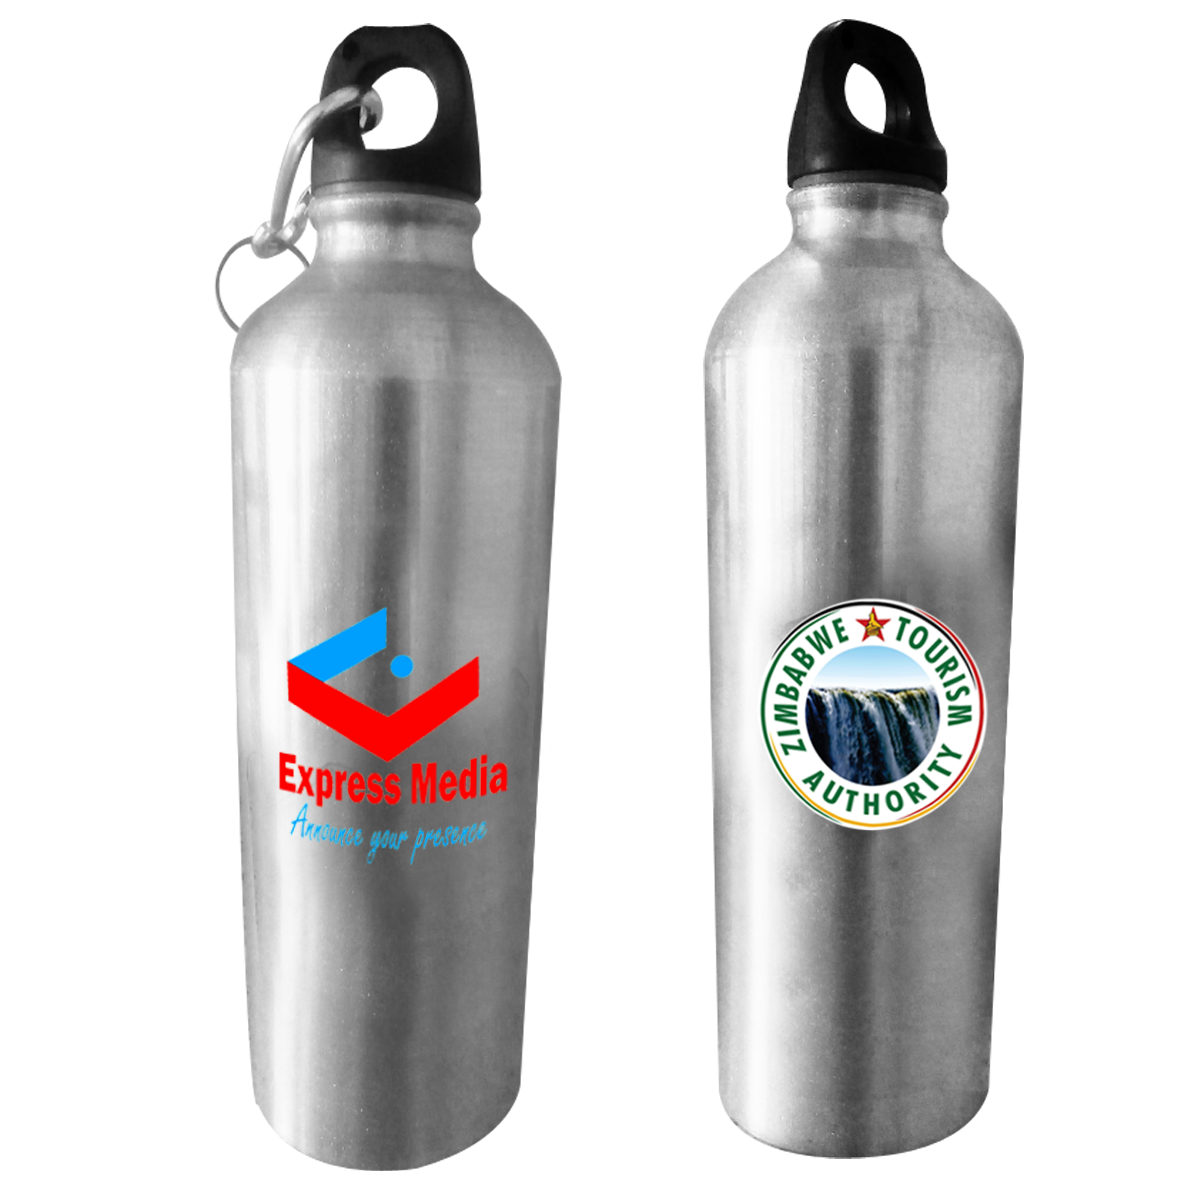 Branded Drink Bottles/Water bottles